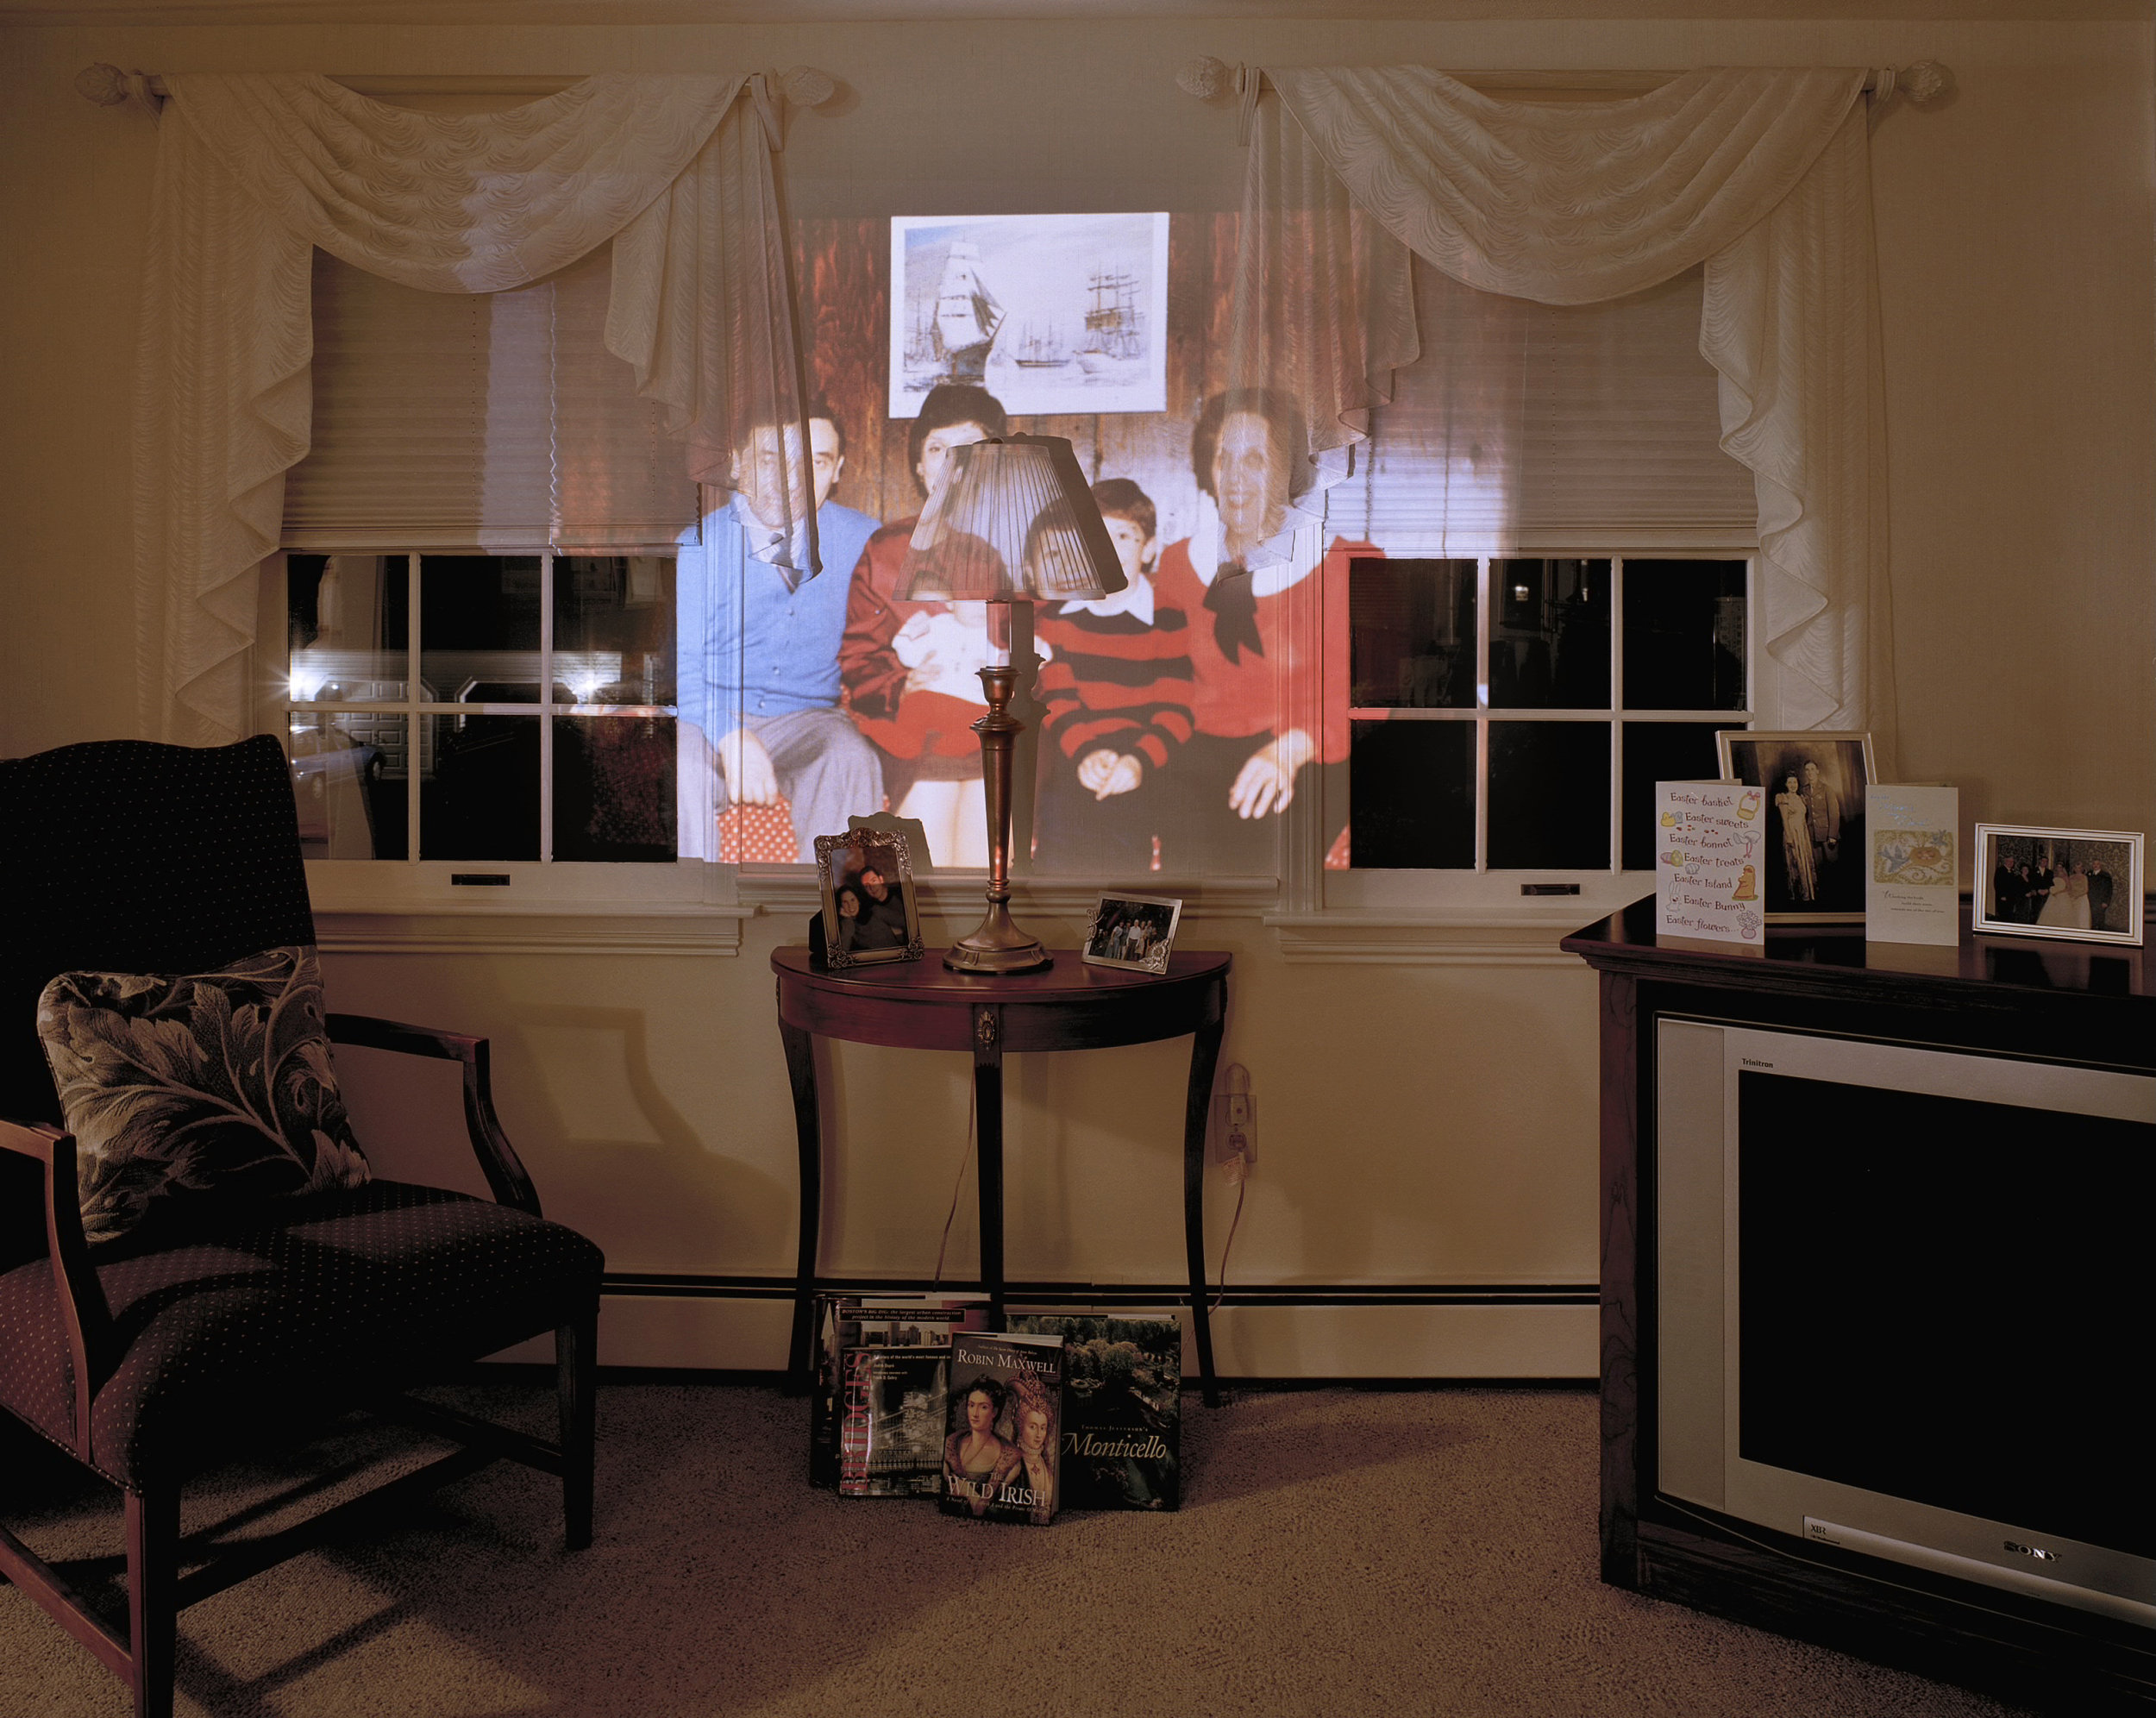 Family Room, 2004